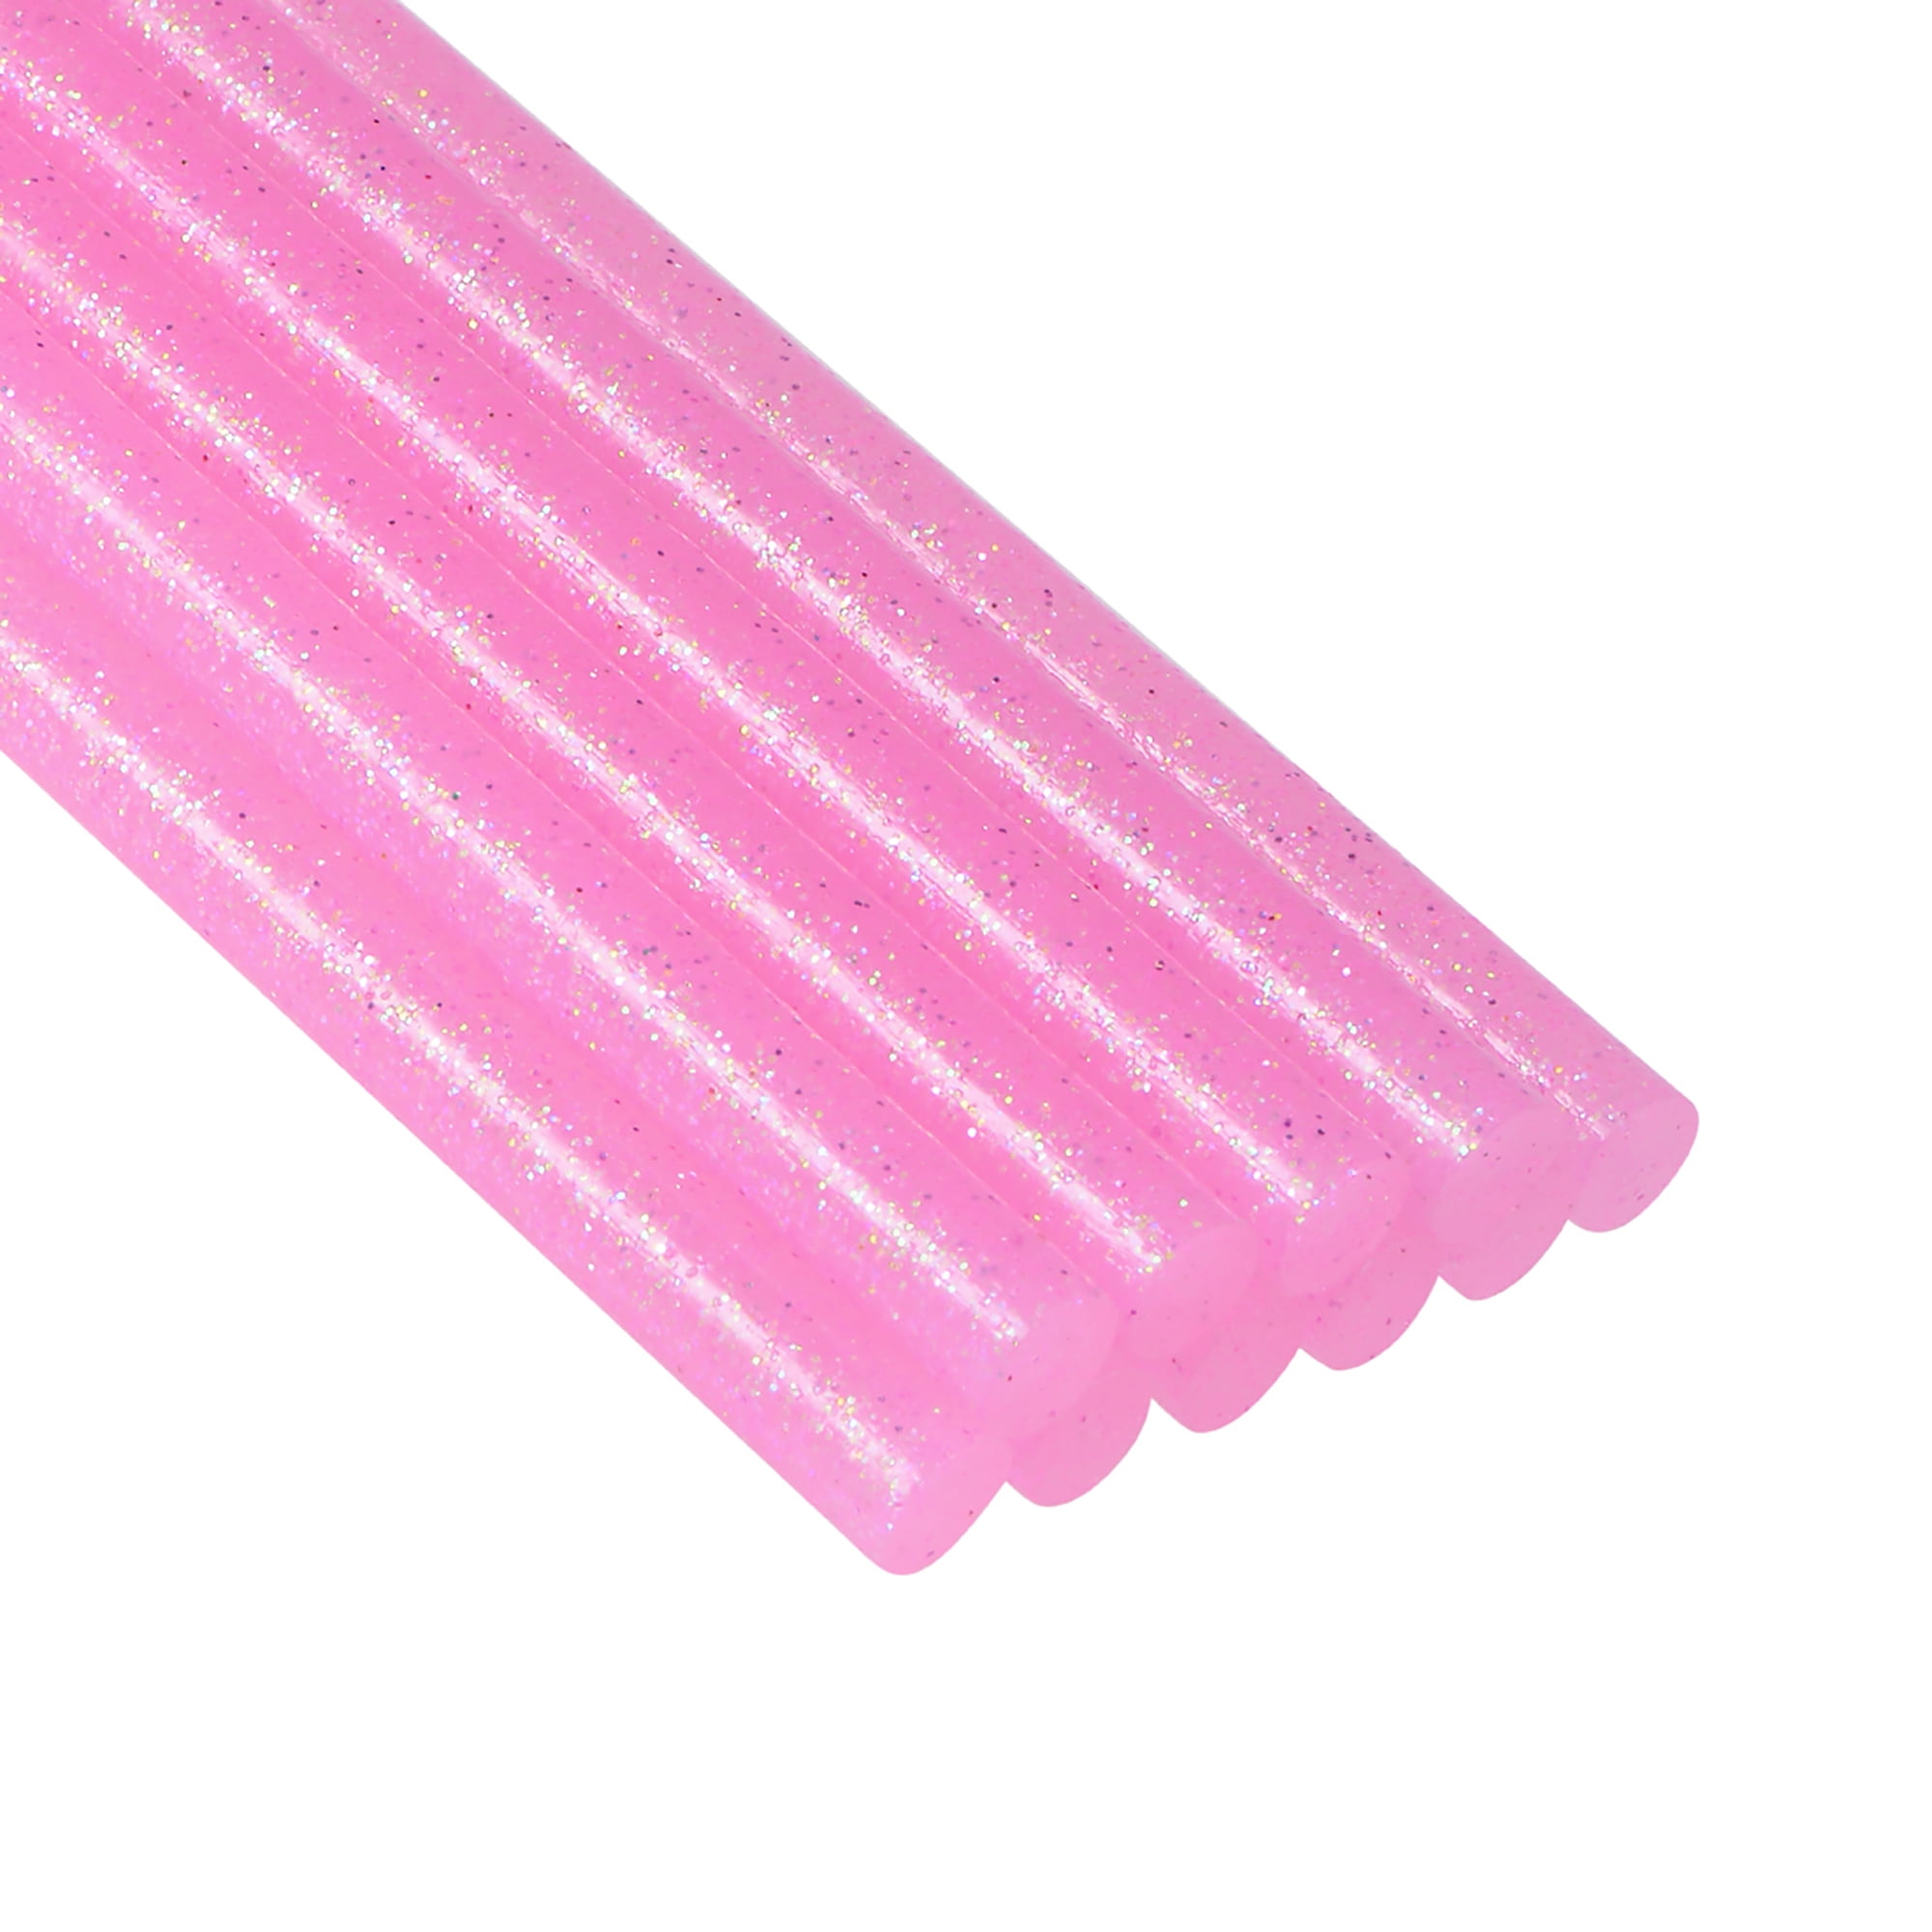 Petift Colored Glitter Hot Glue Sticks,Hot Melt Adhesive Glue Sticks Mini Size 0.27 inch by 3.93 inch,12 Color 60 Pcs for Arts Crafts, DIY, Home